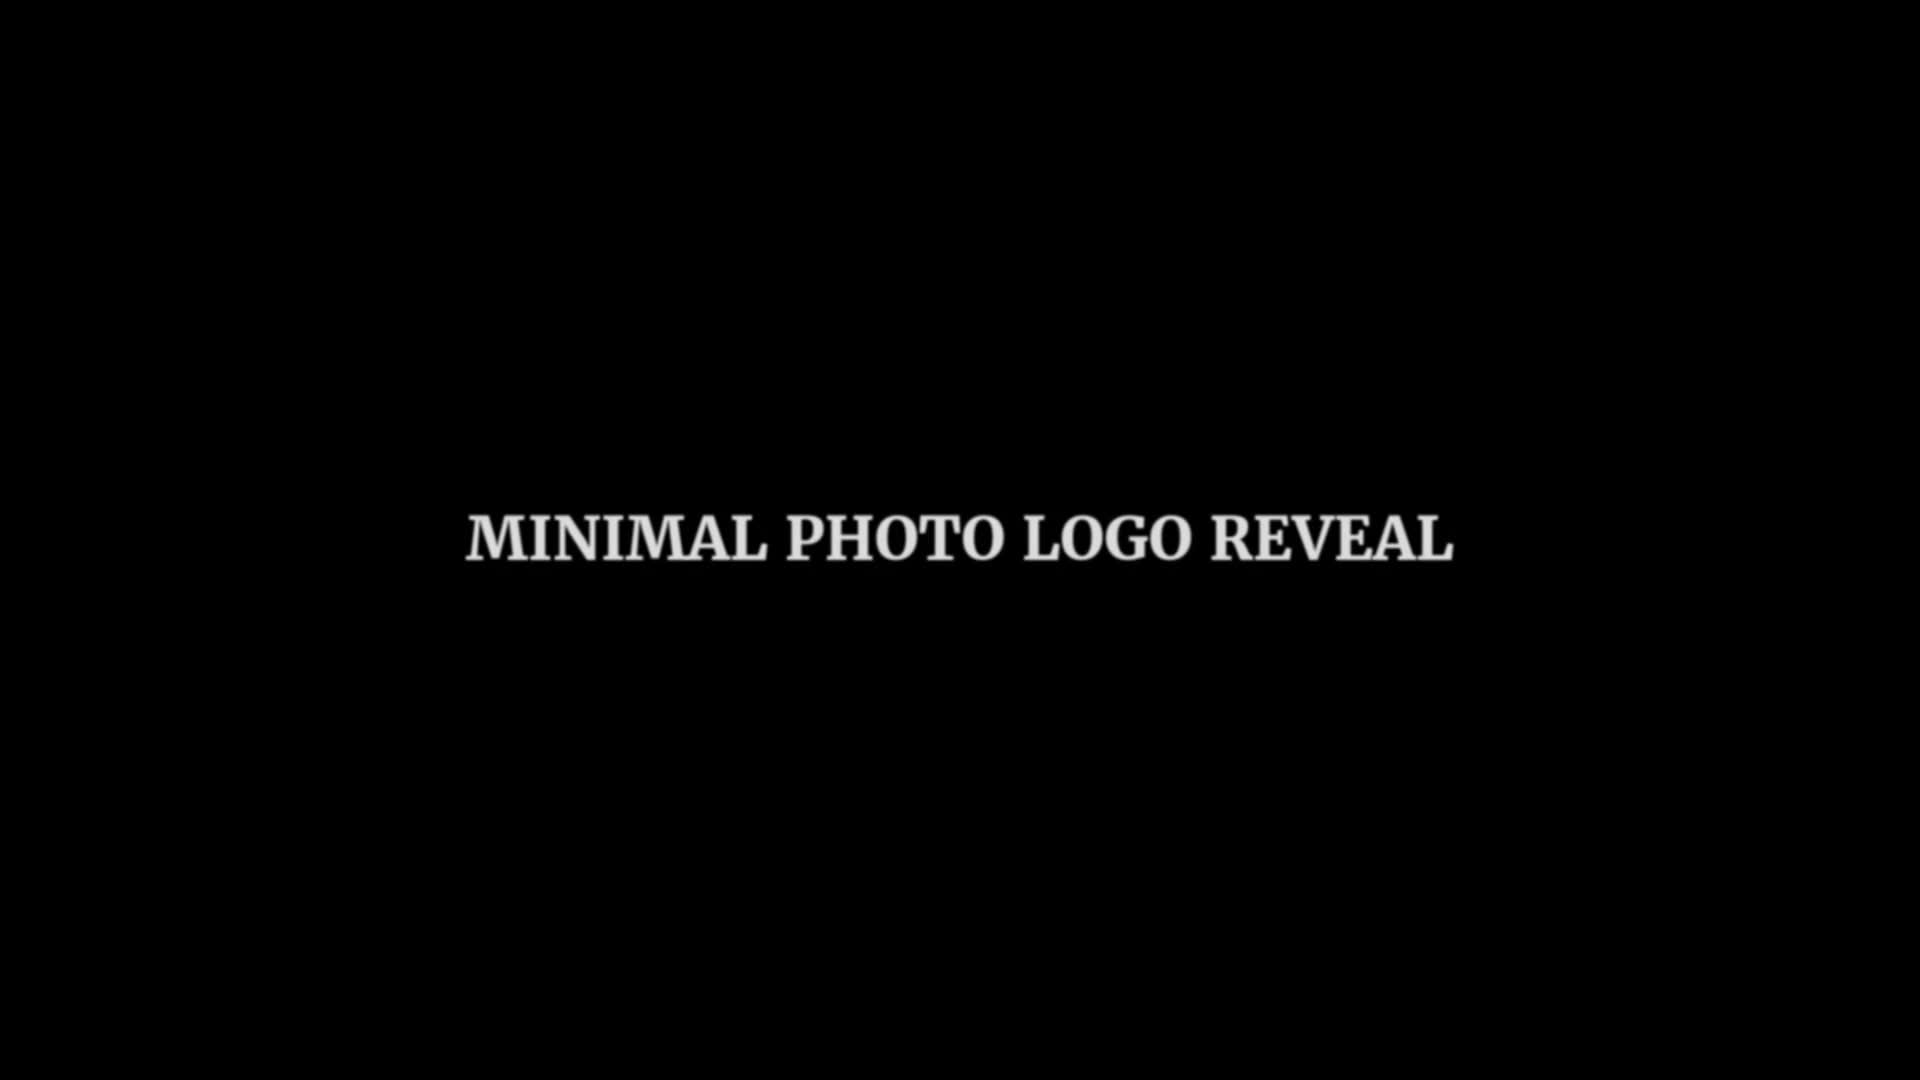 Minimal Photo Logo Reveal | Essential Graphics Videohive 35071336 Premiere Pro Image 1